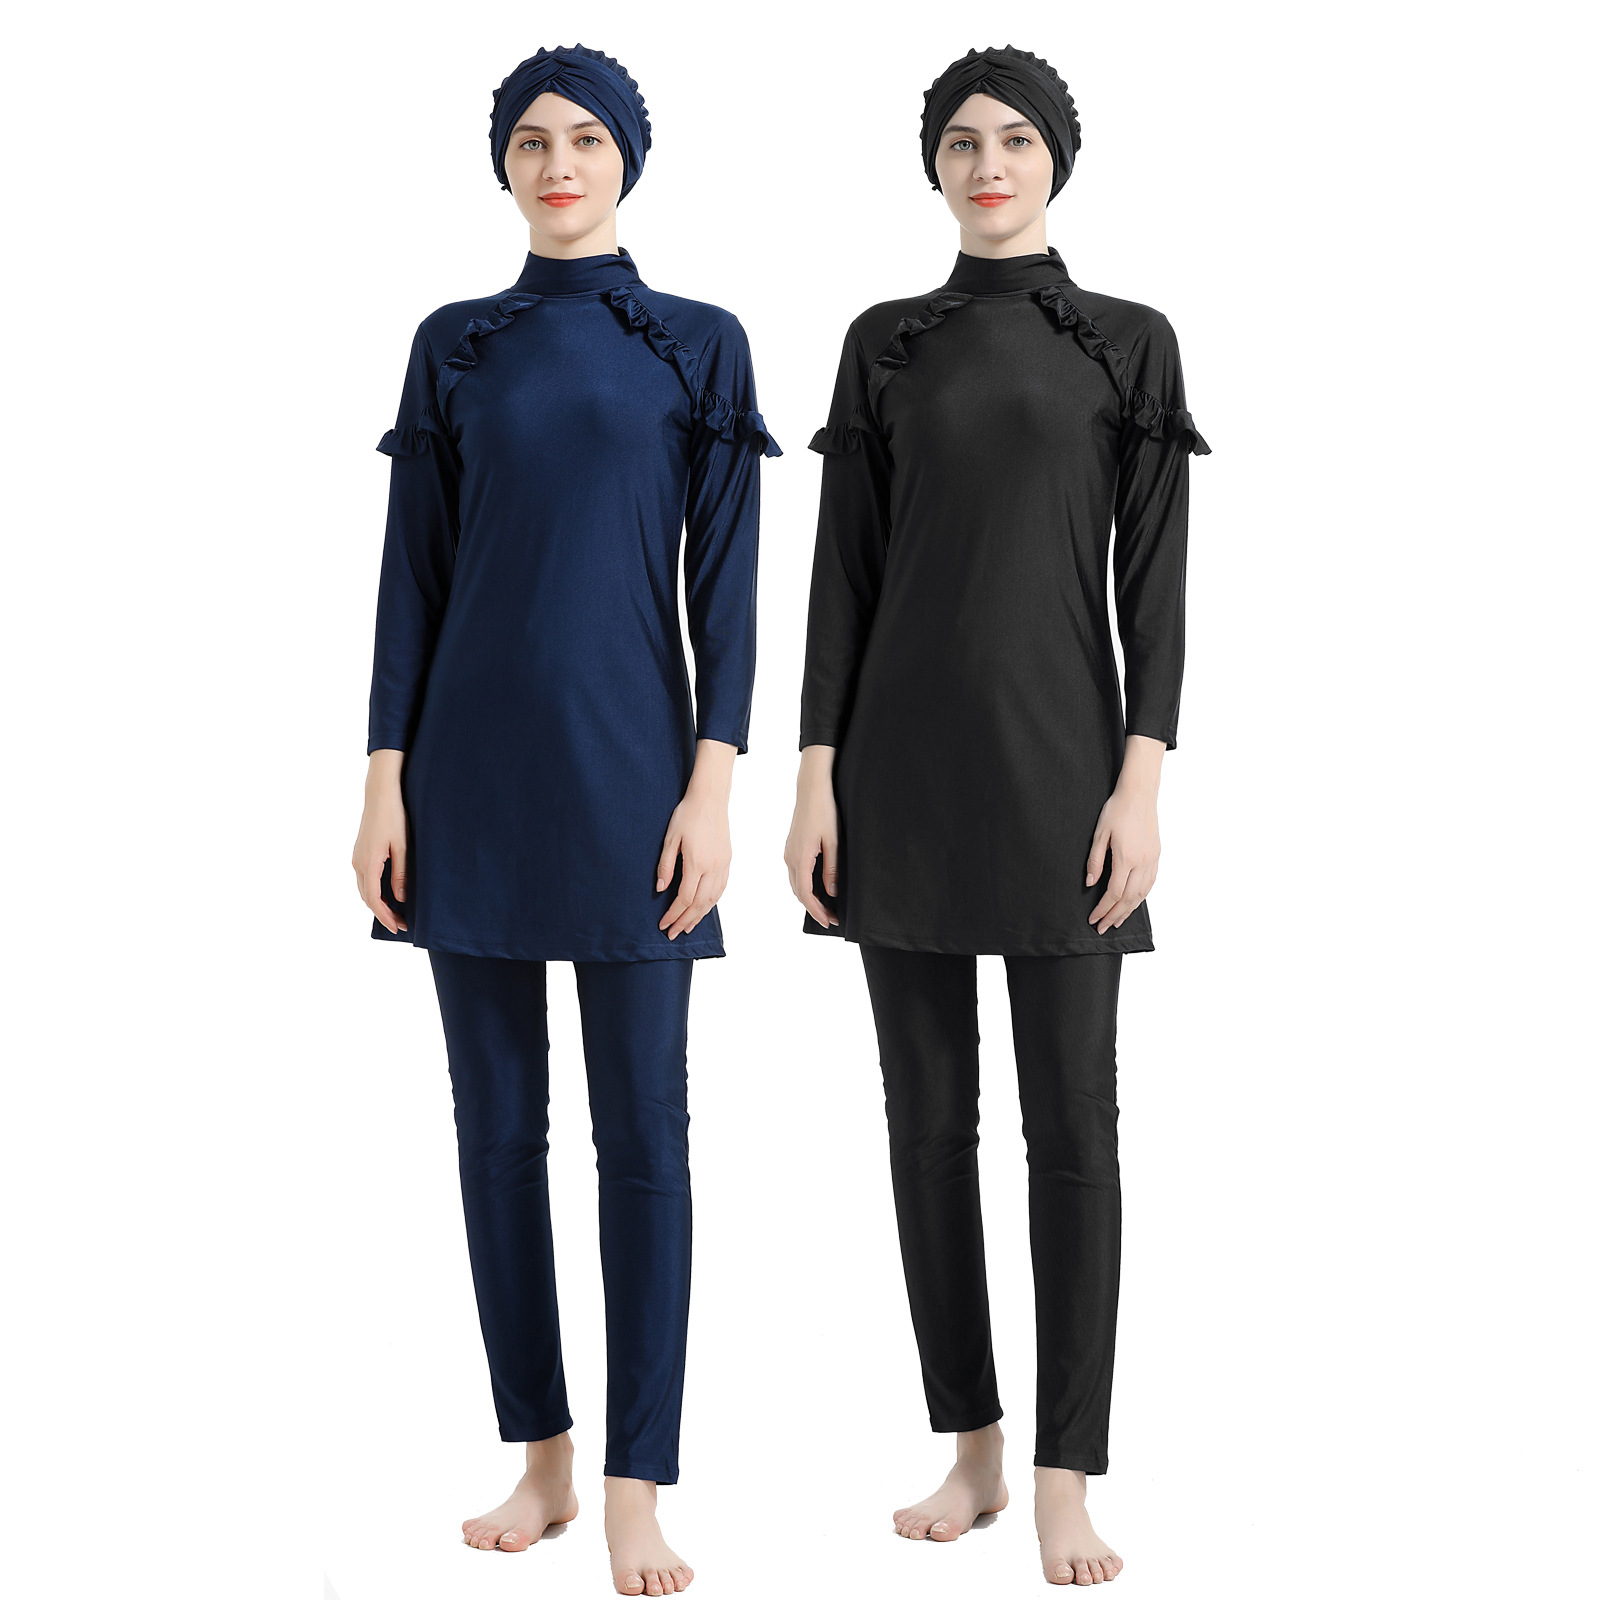 New Muslim swimsuit Middle Eastern conservative Hui swimsuit Amazon AliExpress sunscreen three-piece swimsuit L06